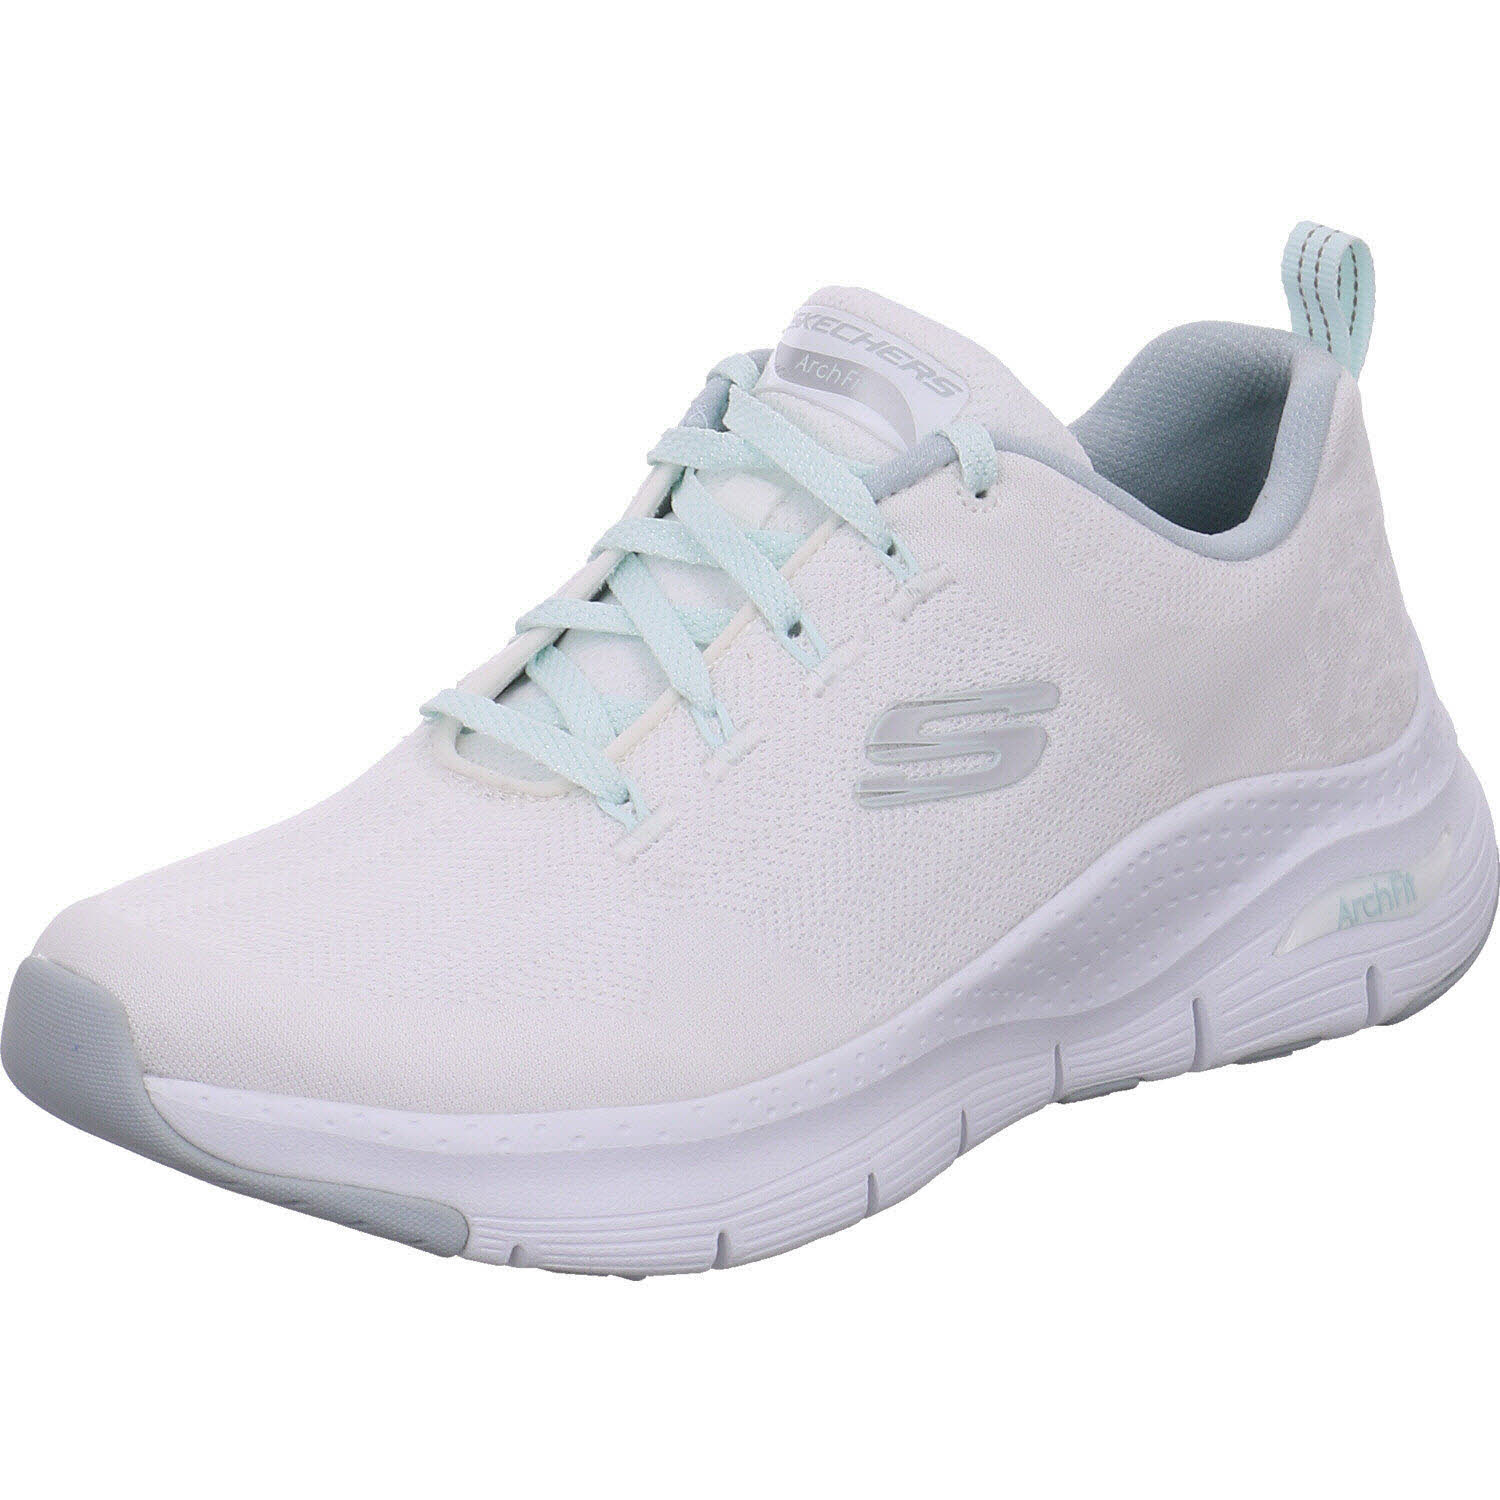 Skechers Sneaker low Arch  Fit - Comfy Wave Weiß/mint für Damen